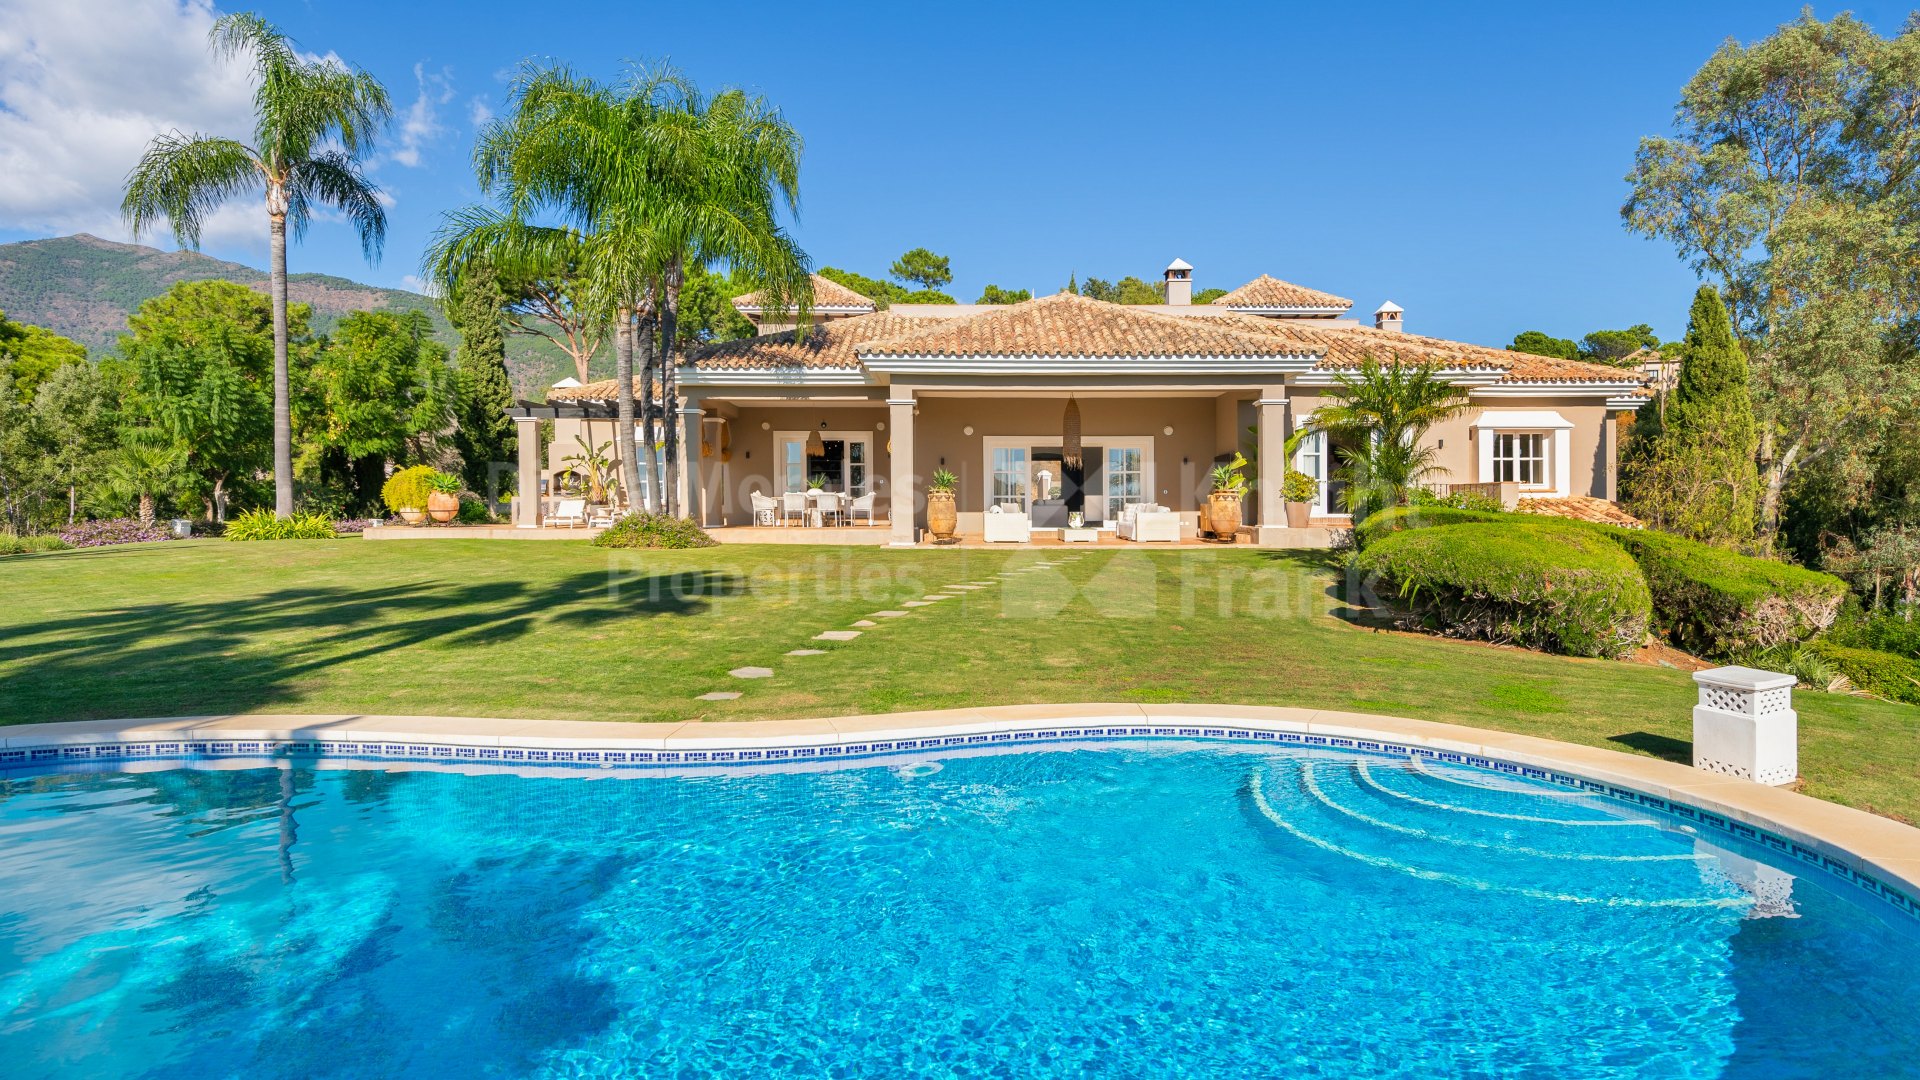 La Zagaleta, Casa Lavanda, средиземноморский дом с видом на море